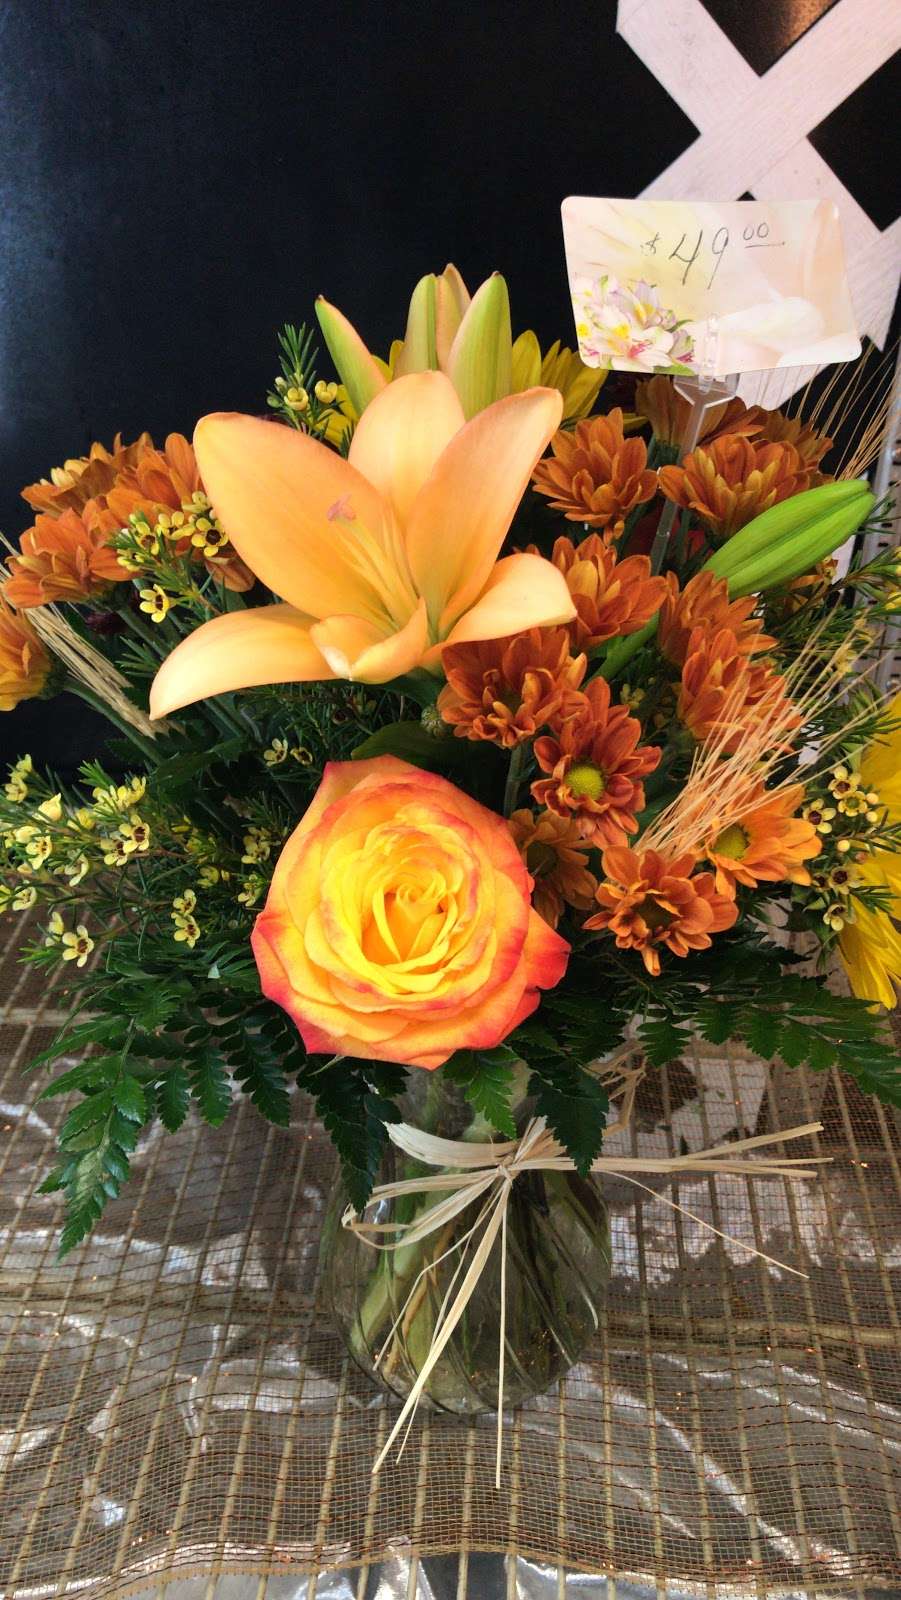 Anitas Beautiful Flowers | 50 Foreston Woods Dr #108, Stafford, VA 22554, United States | Phone: (540) 720-5040